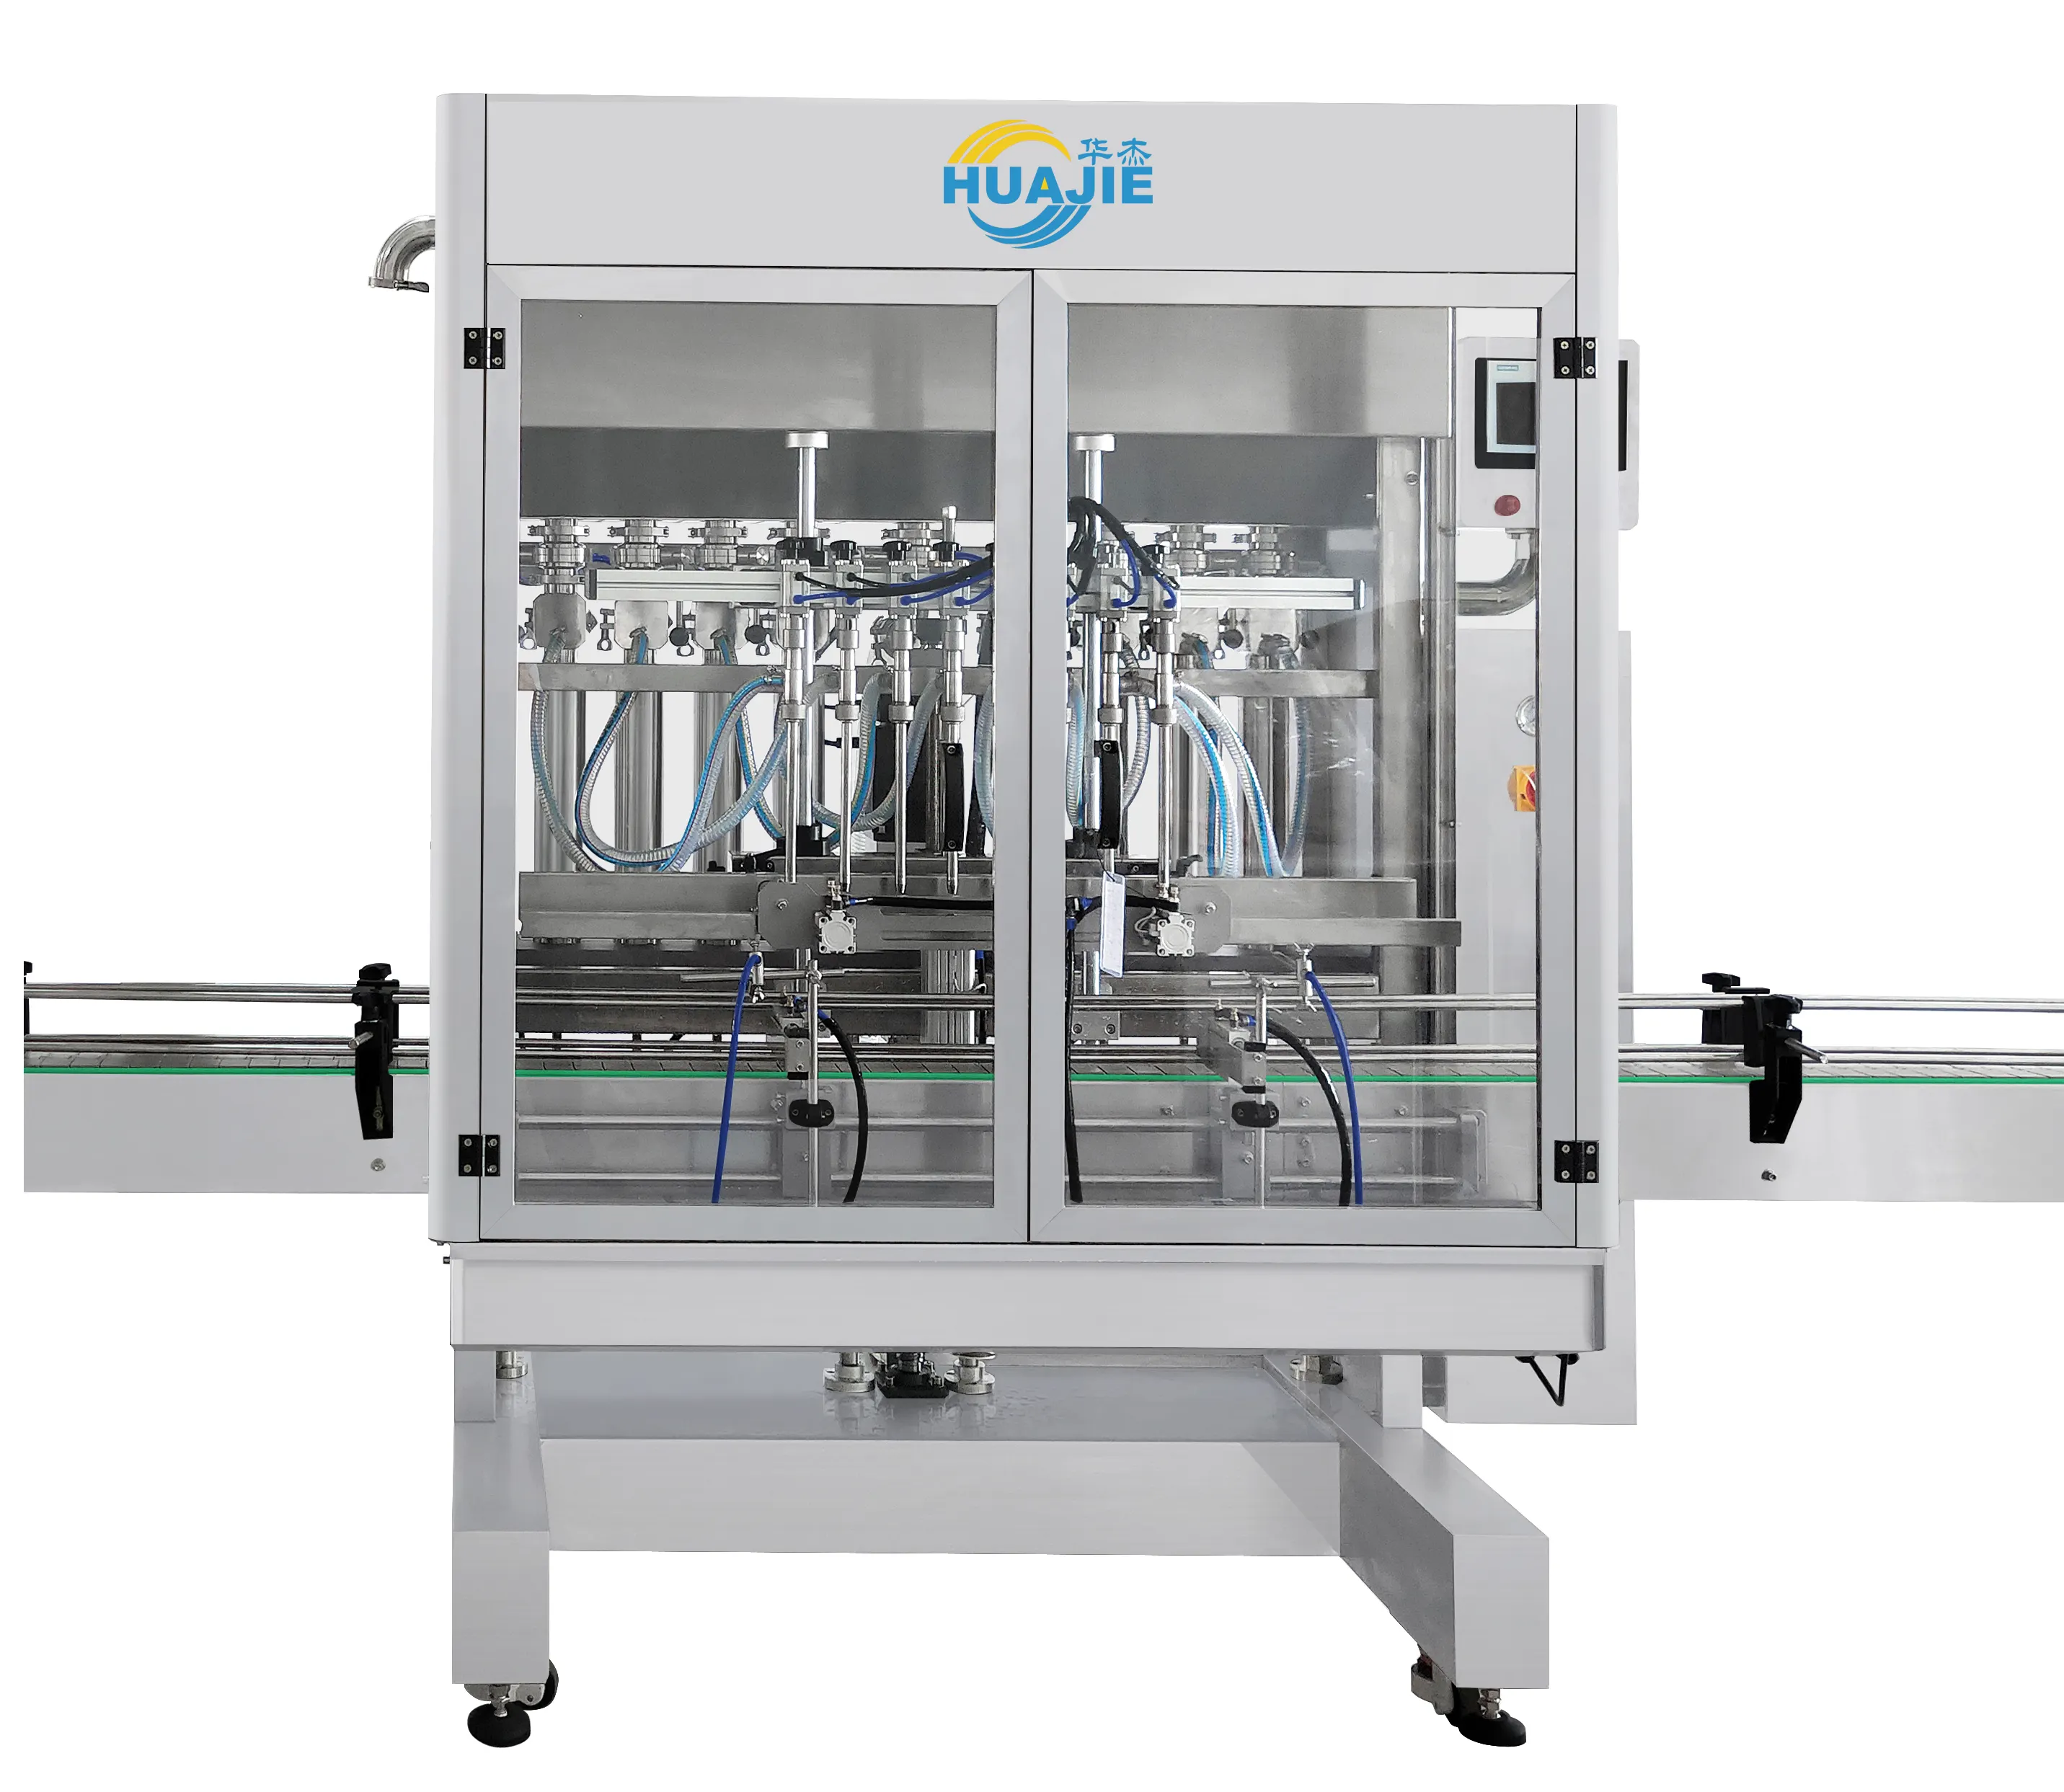 HUAJIE 공장 자동 샴푸 액체 비누 크림 피스톤 충전 기계 50-2000ML 액체 화장품 충전 기계